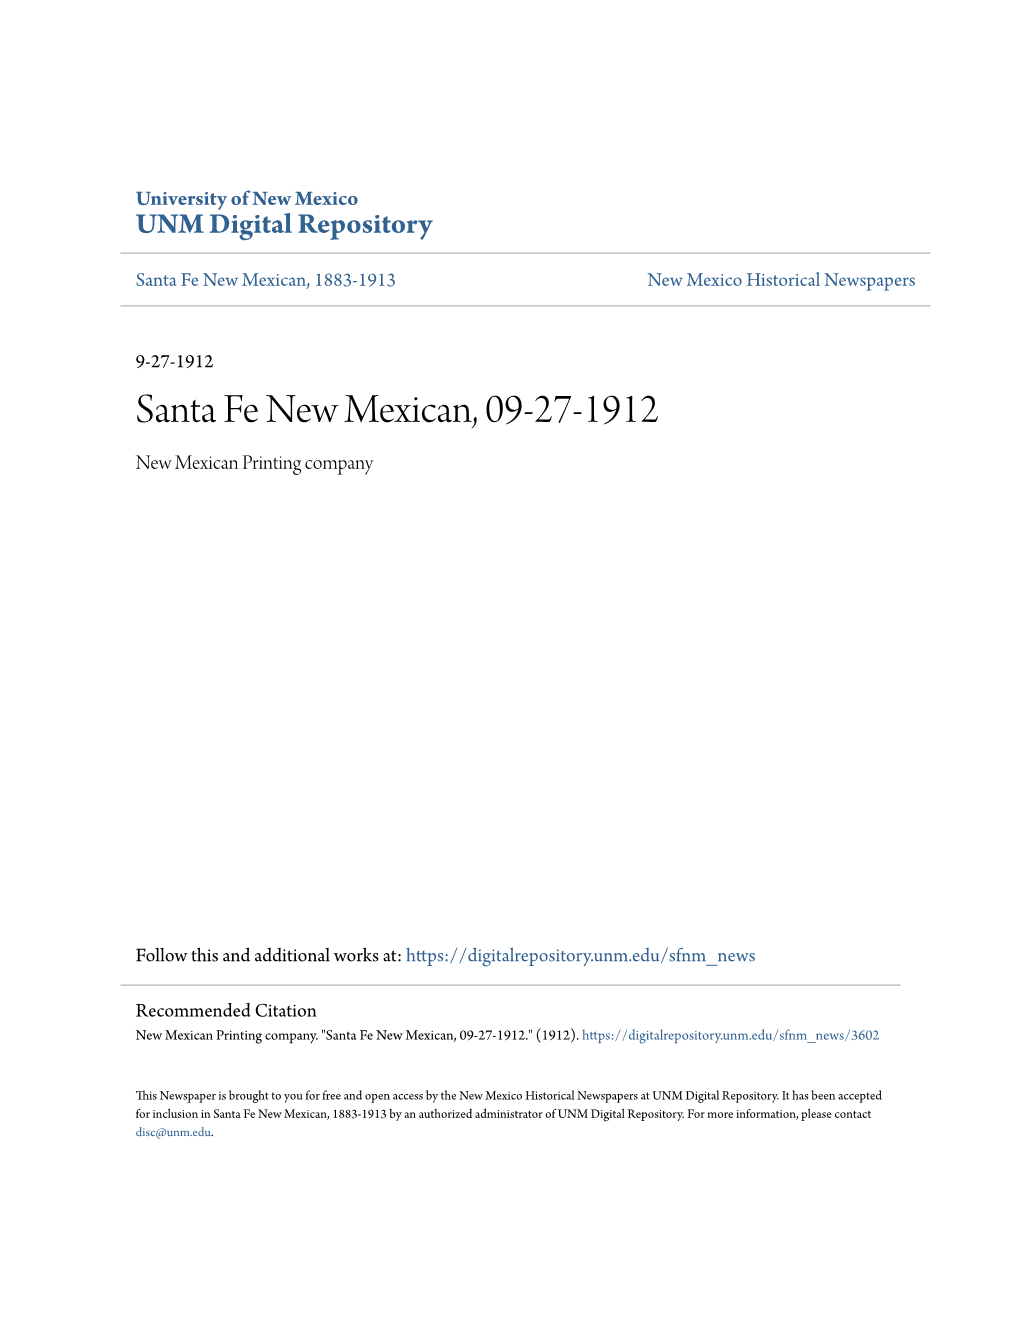 Santa Fe New Mexican, 09-27-1912 New Mexican Printing Company